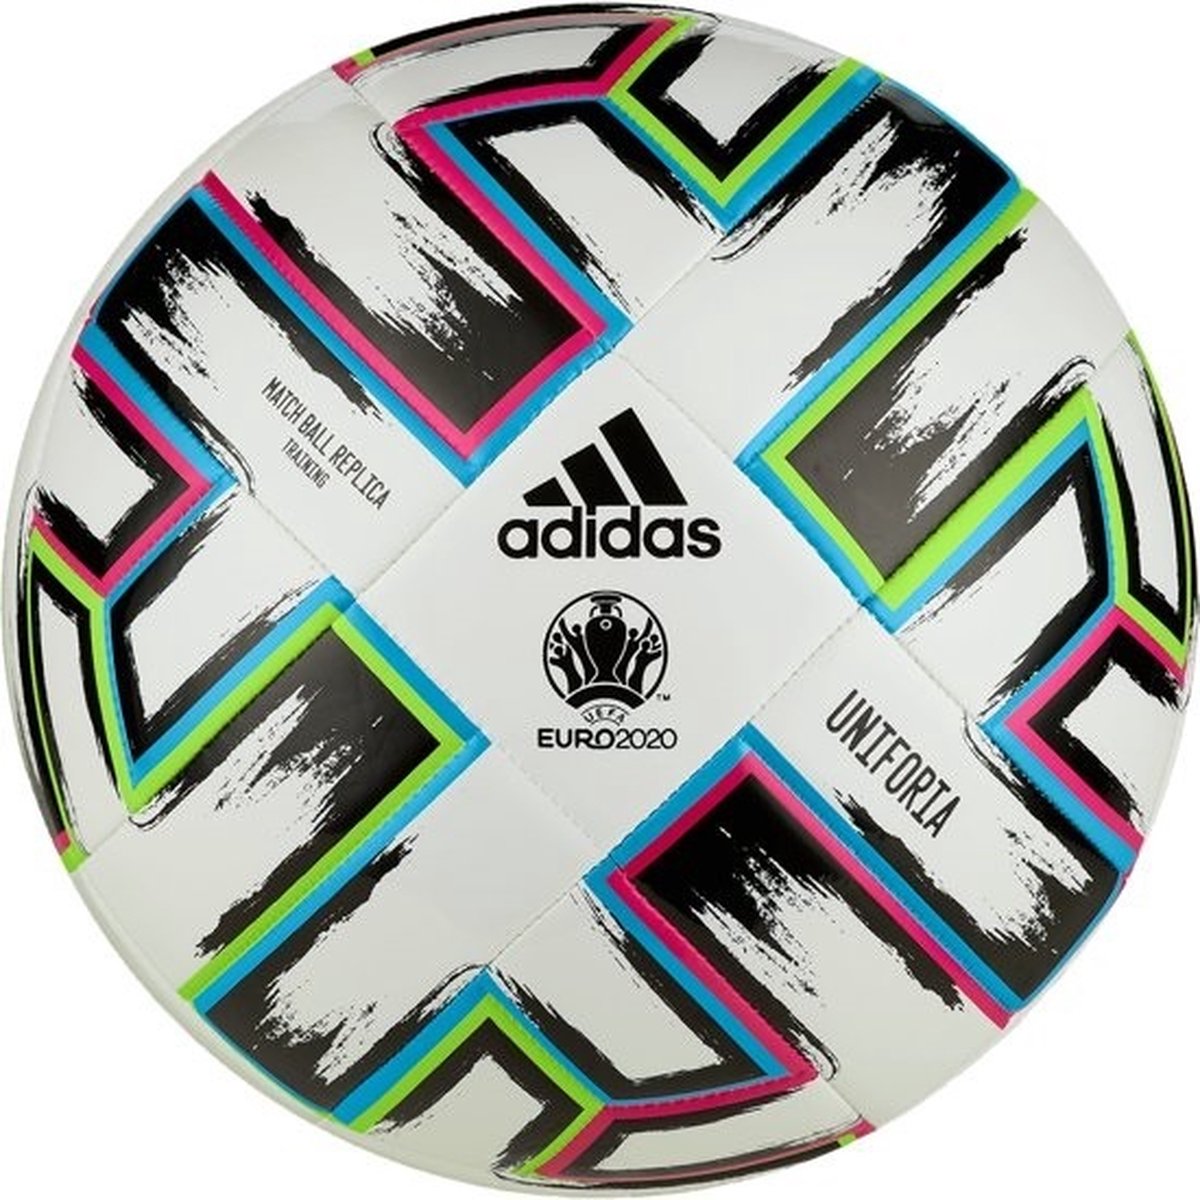 Adidas EK Voetbal 2020 wit | bol.com